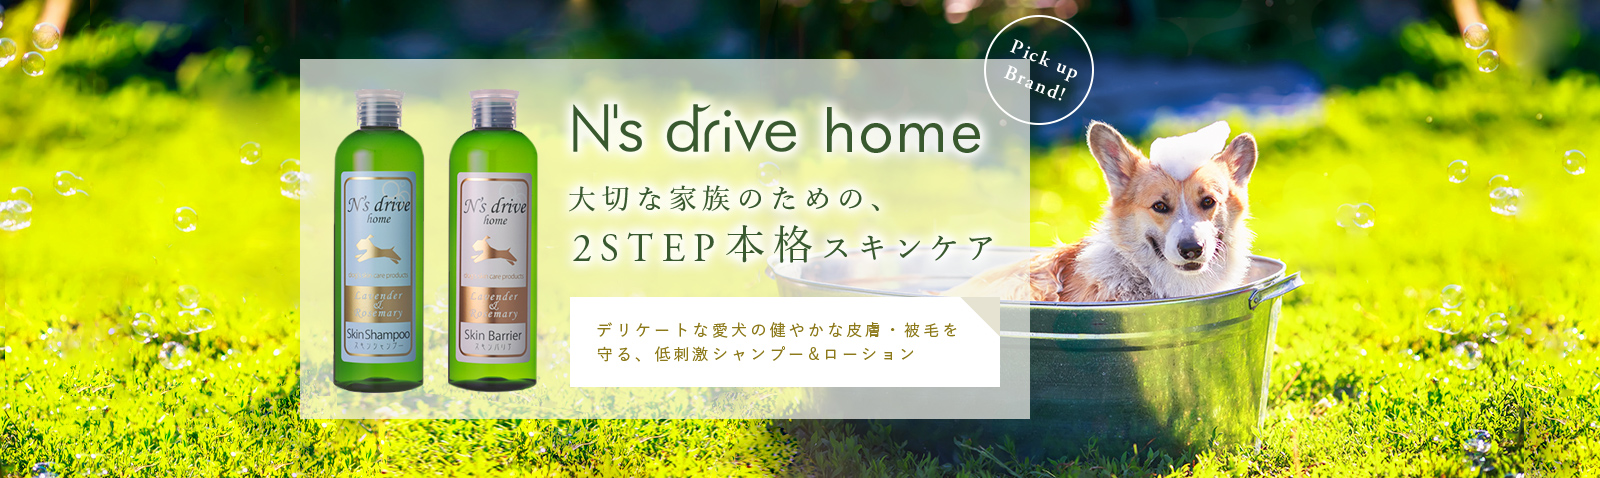 N's drive home 大切な家族のための、2STEP 本格スキンケア